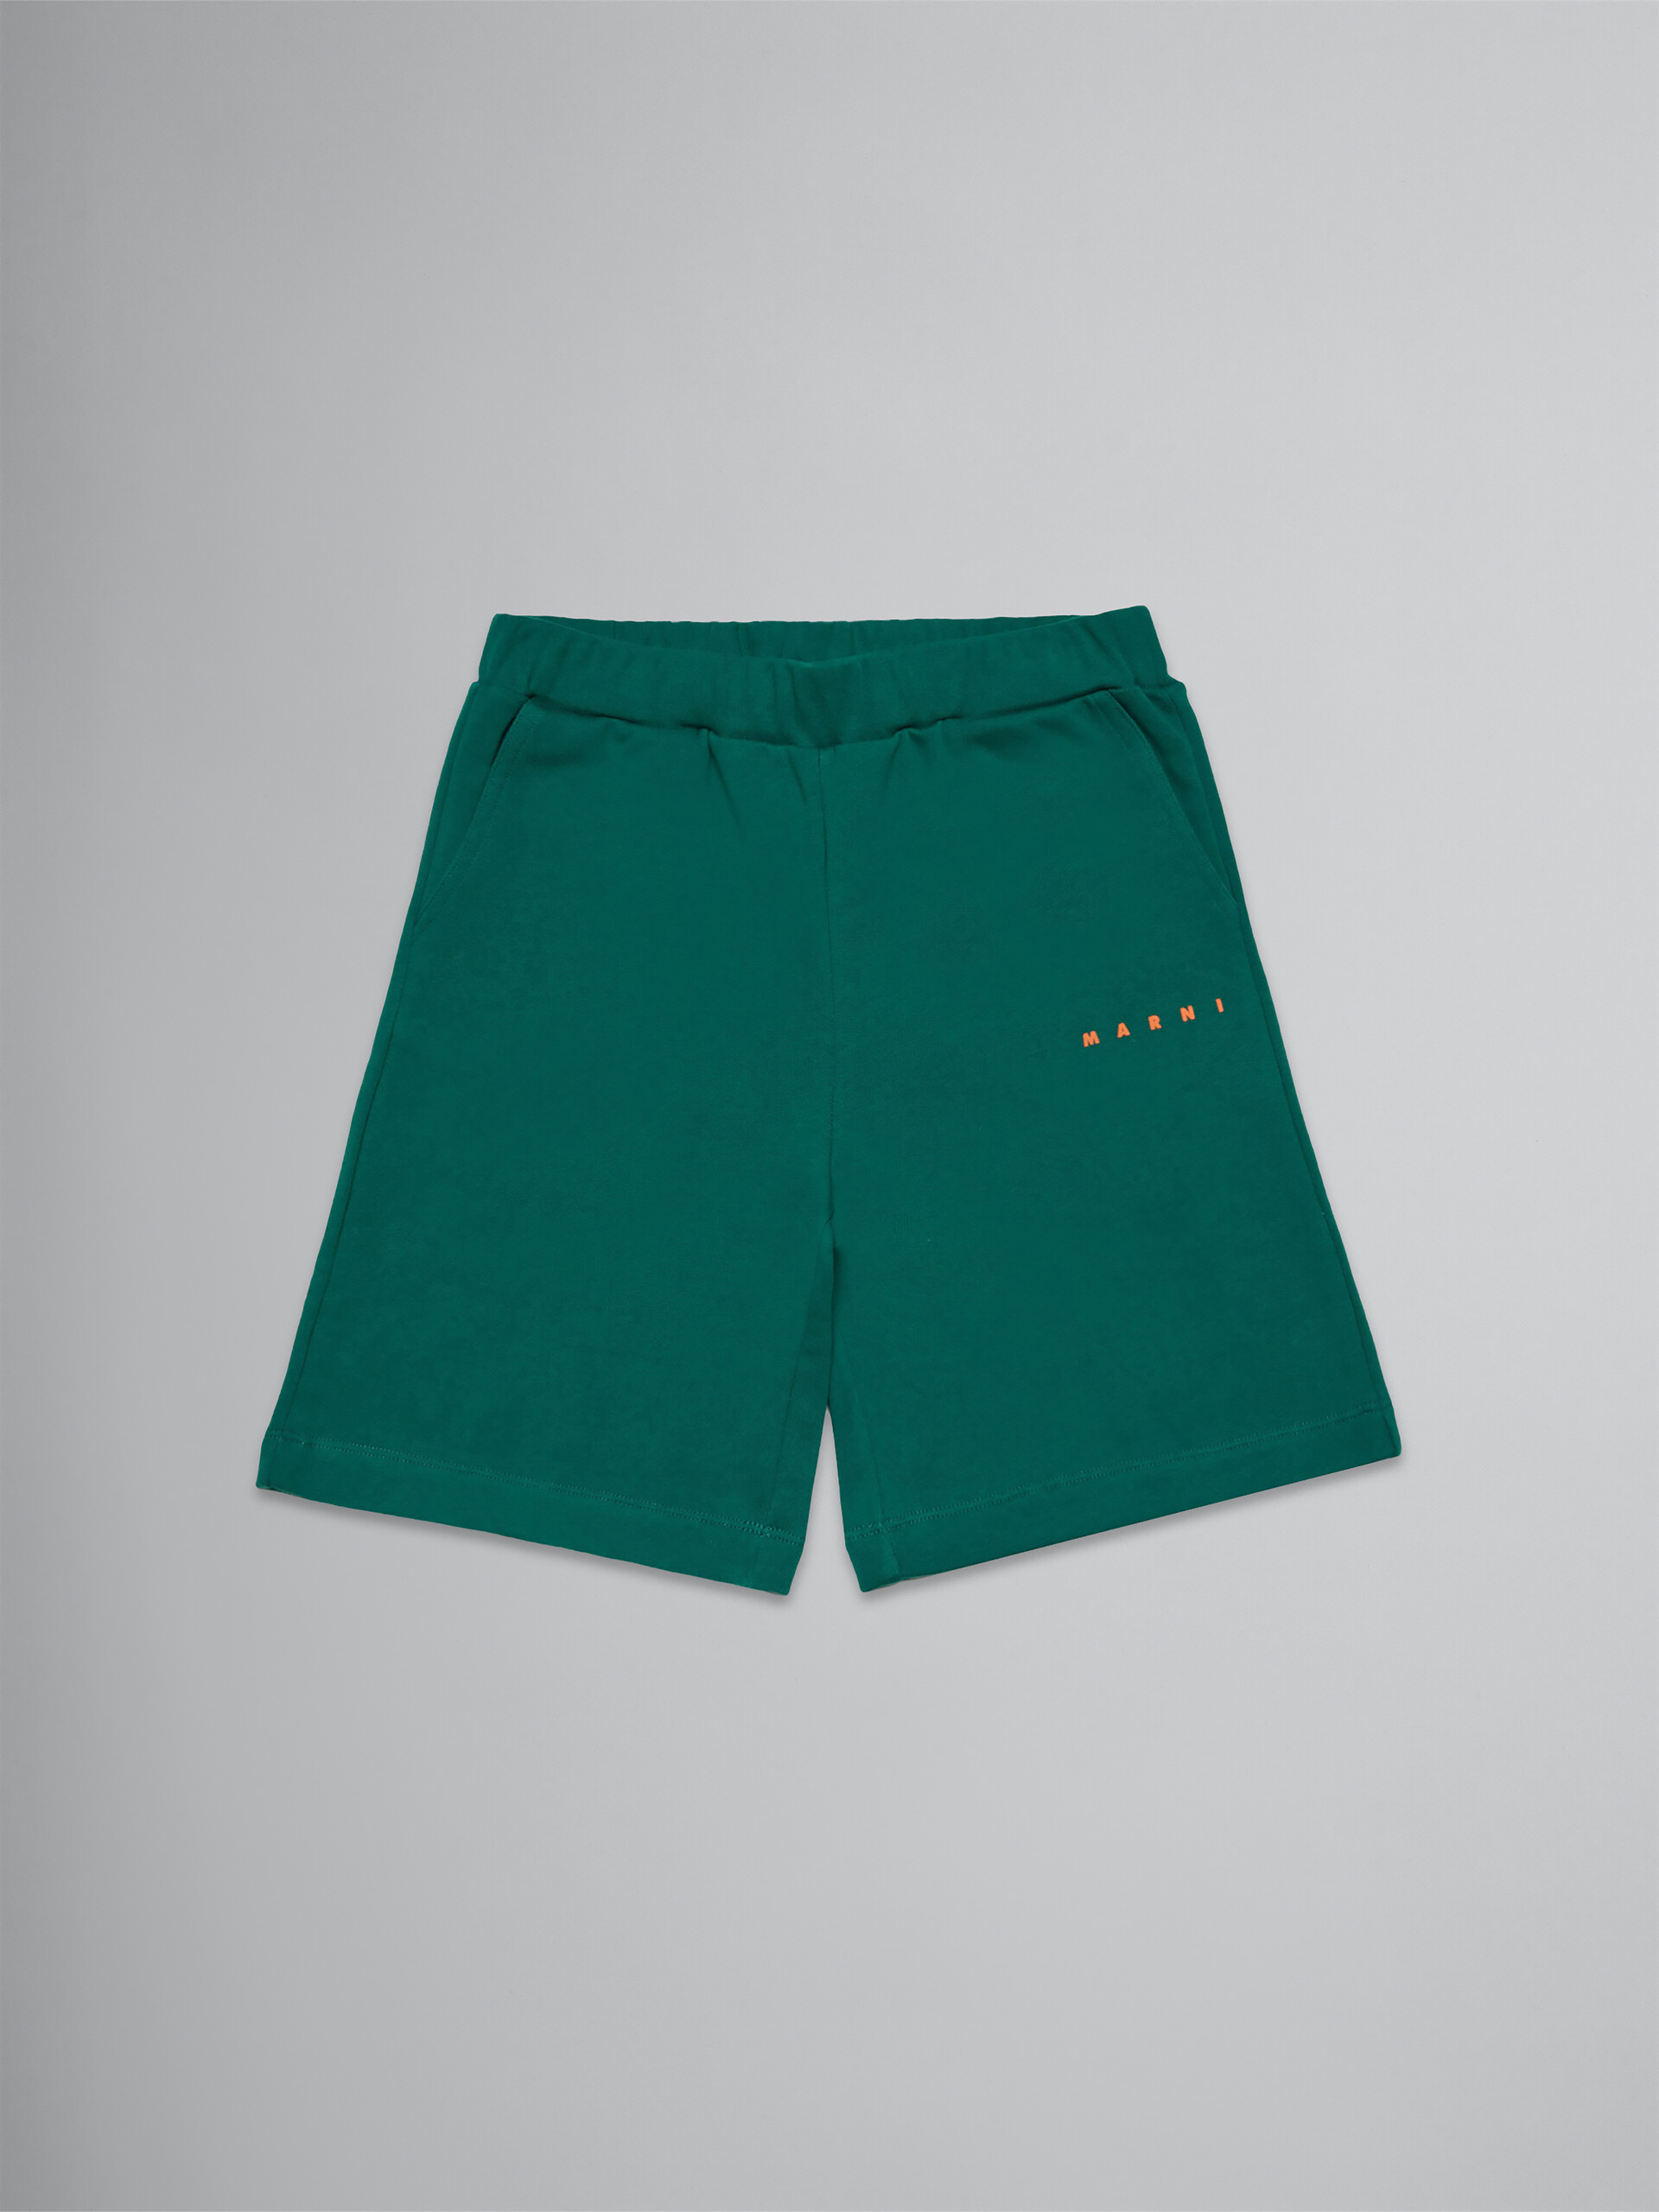 Pantalón corto verde de felpa con logotipo - Pantalones - Image 1